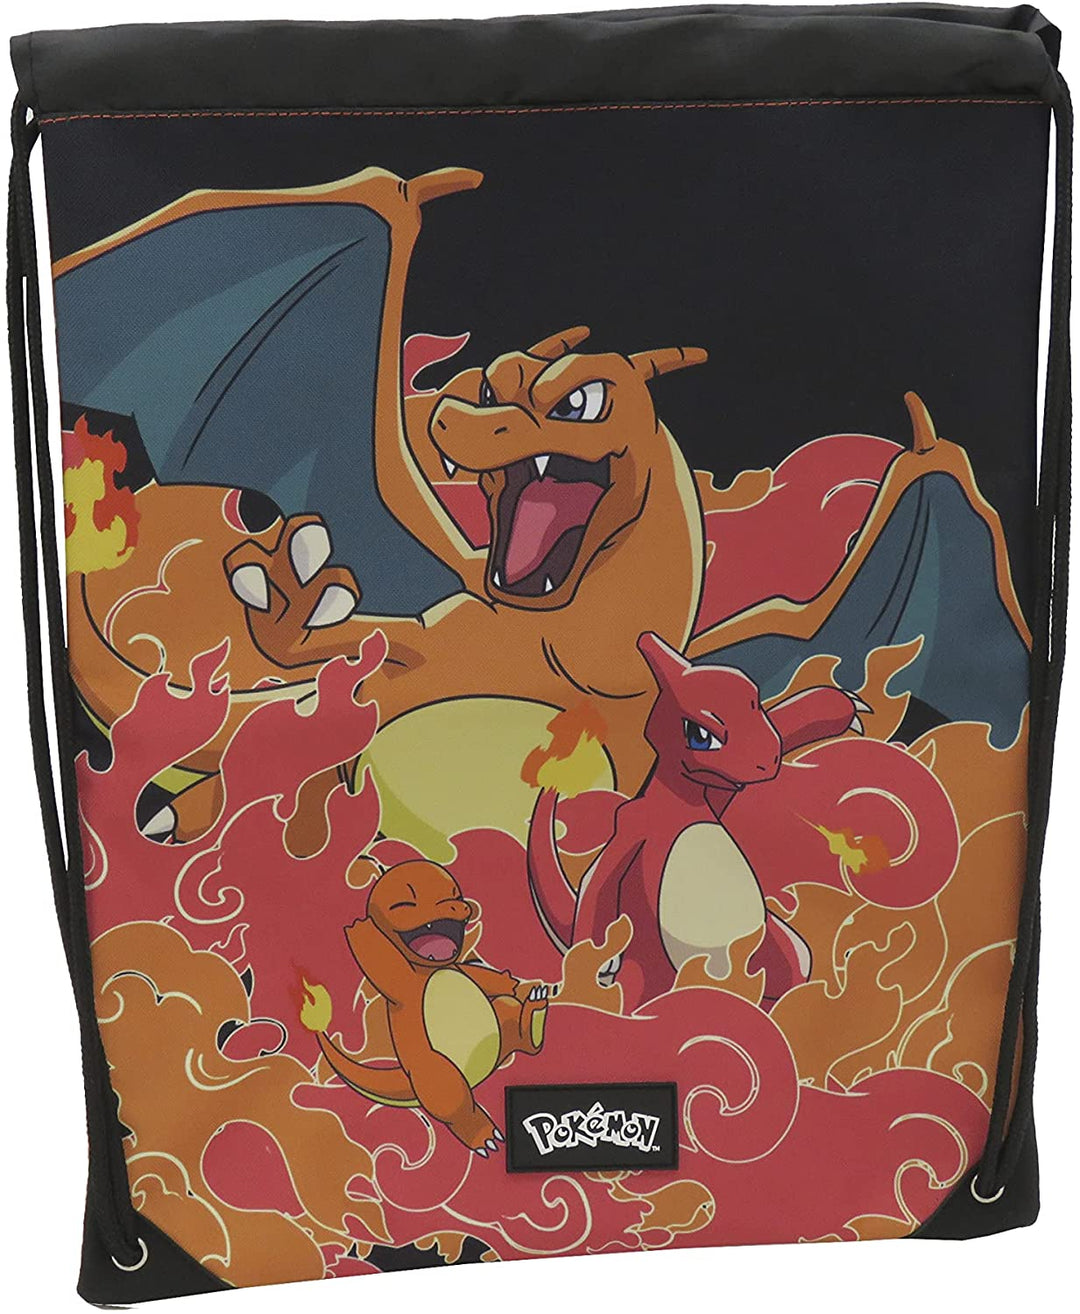 Pokemon Bag Backpack 34x44 - Charmander (CyP Brands)